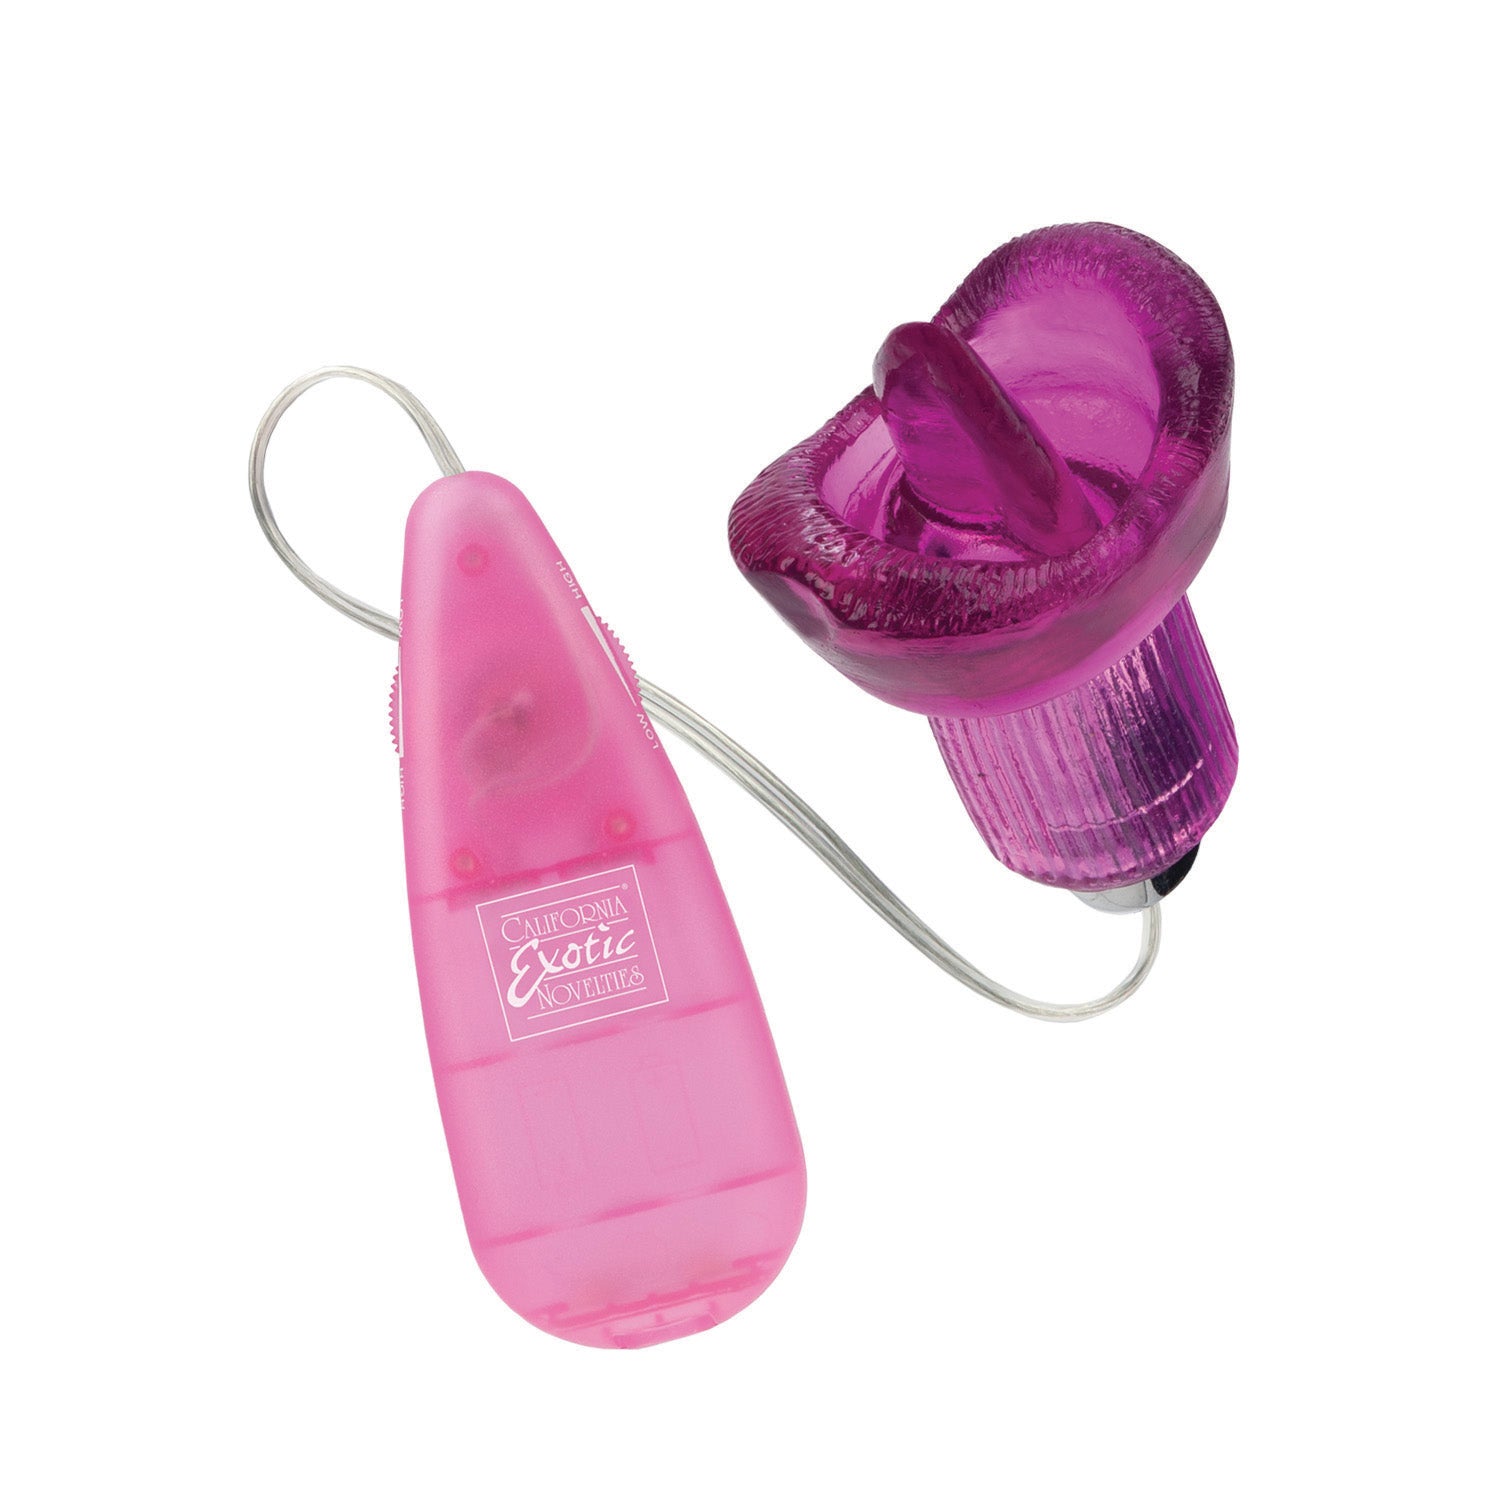 Clit Kisser Clitoral Vibrator - Pink